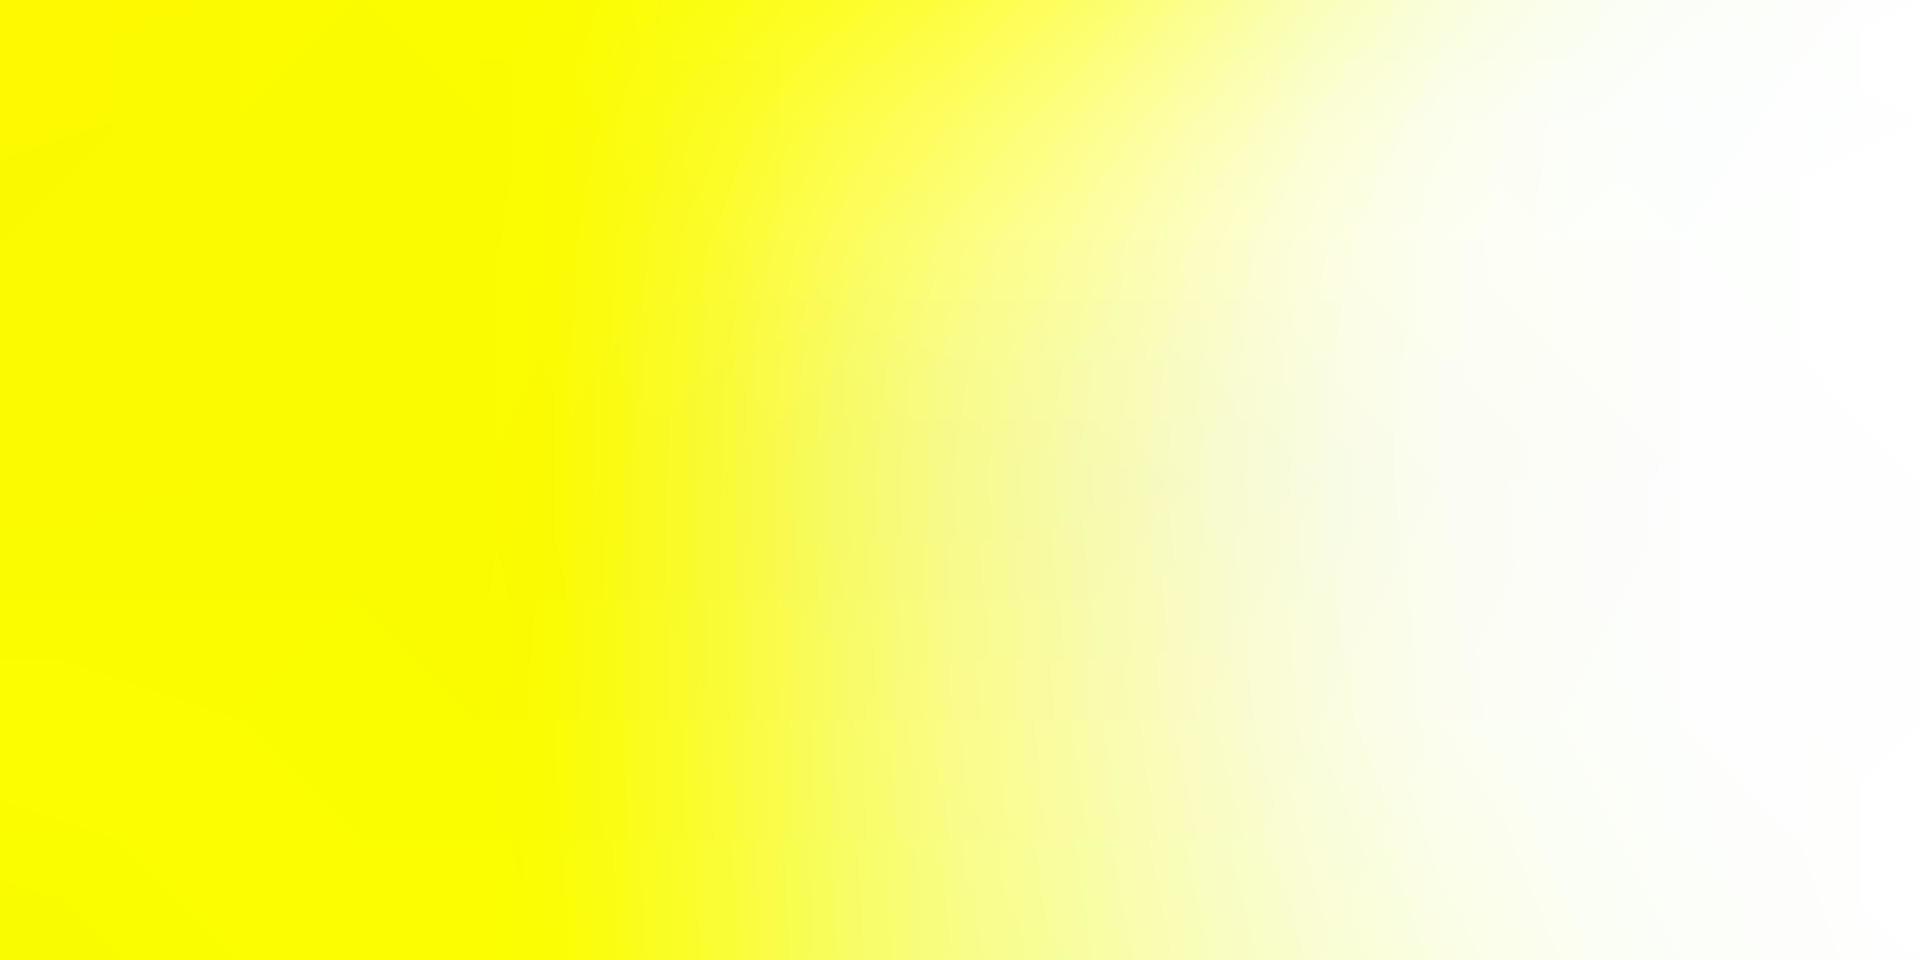 layout de borrão abstrato de vetor amarelo claro.